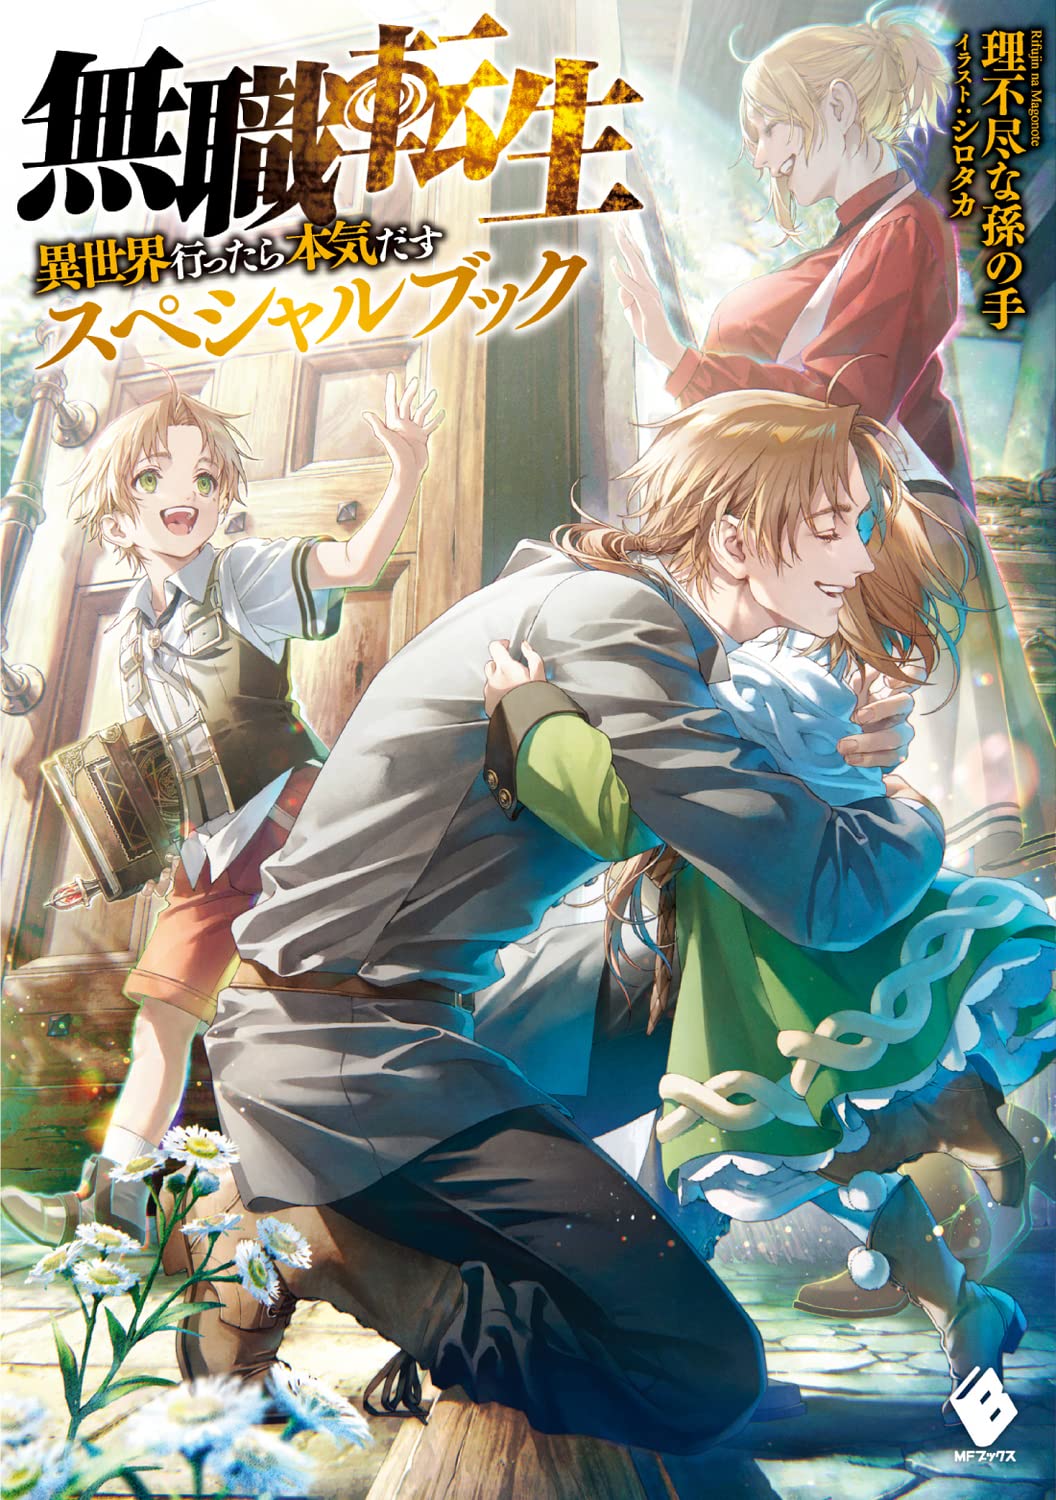 Light Novel: Mushoku Tensei Volume 2